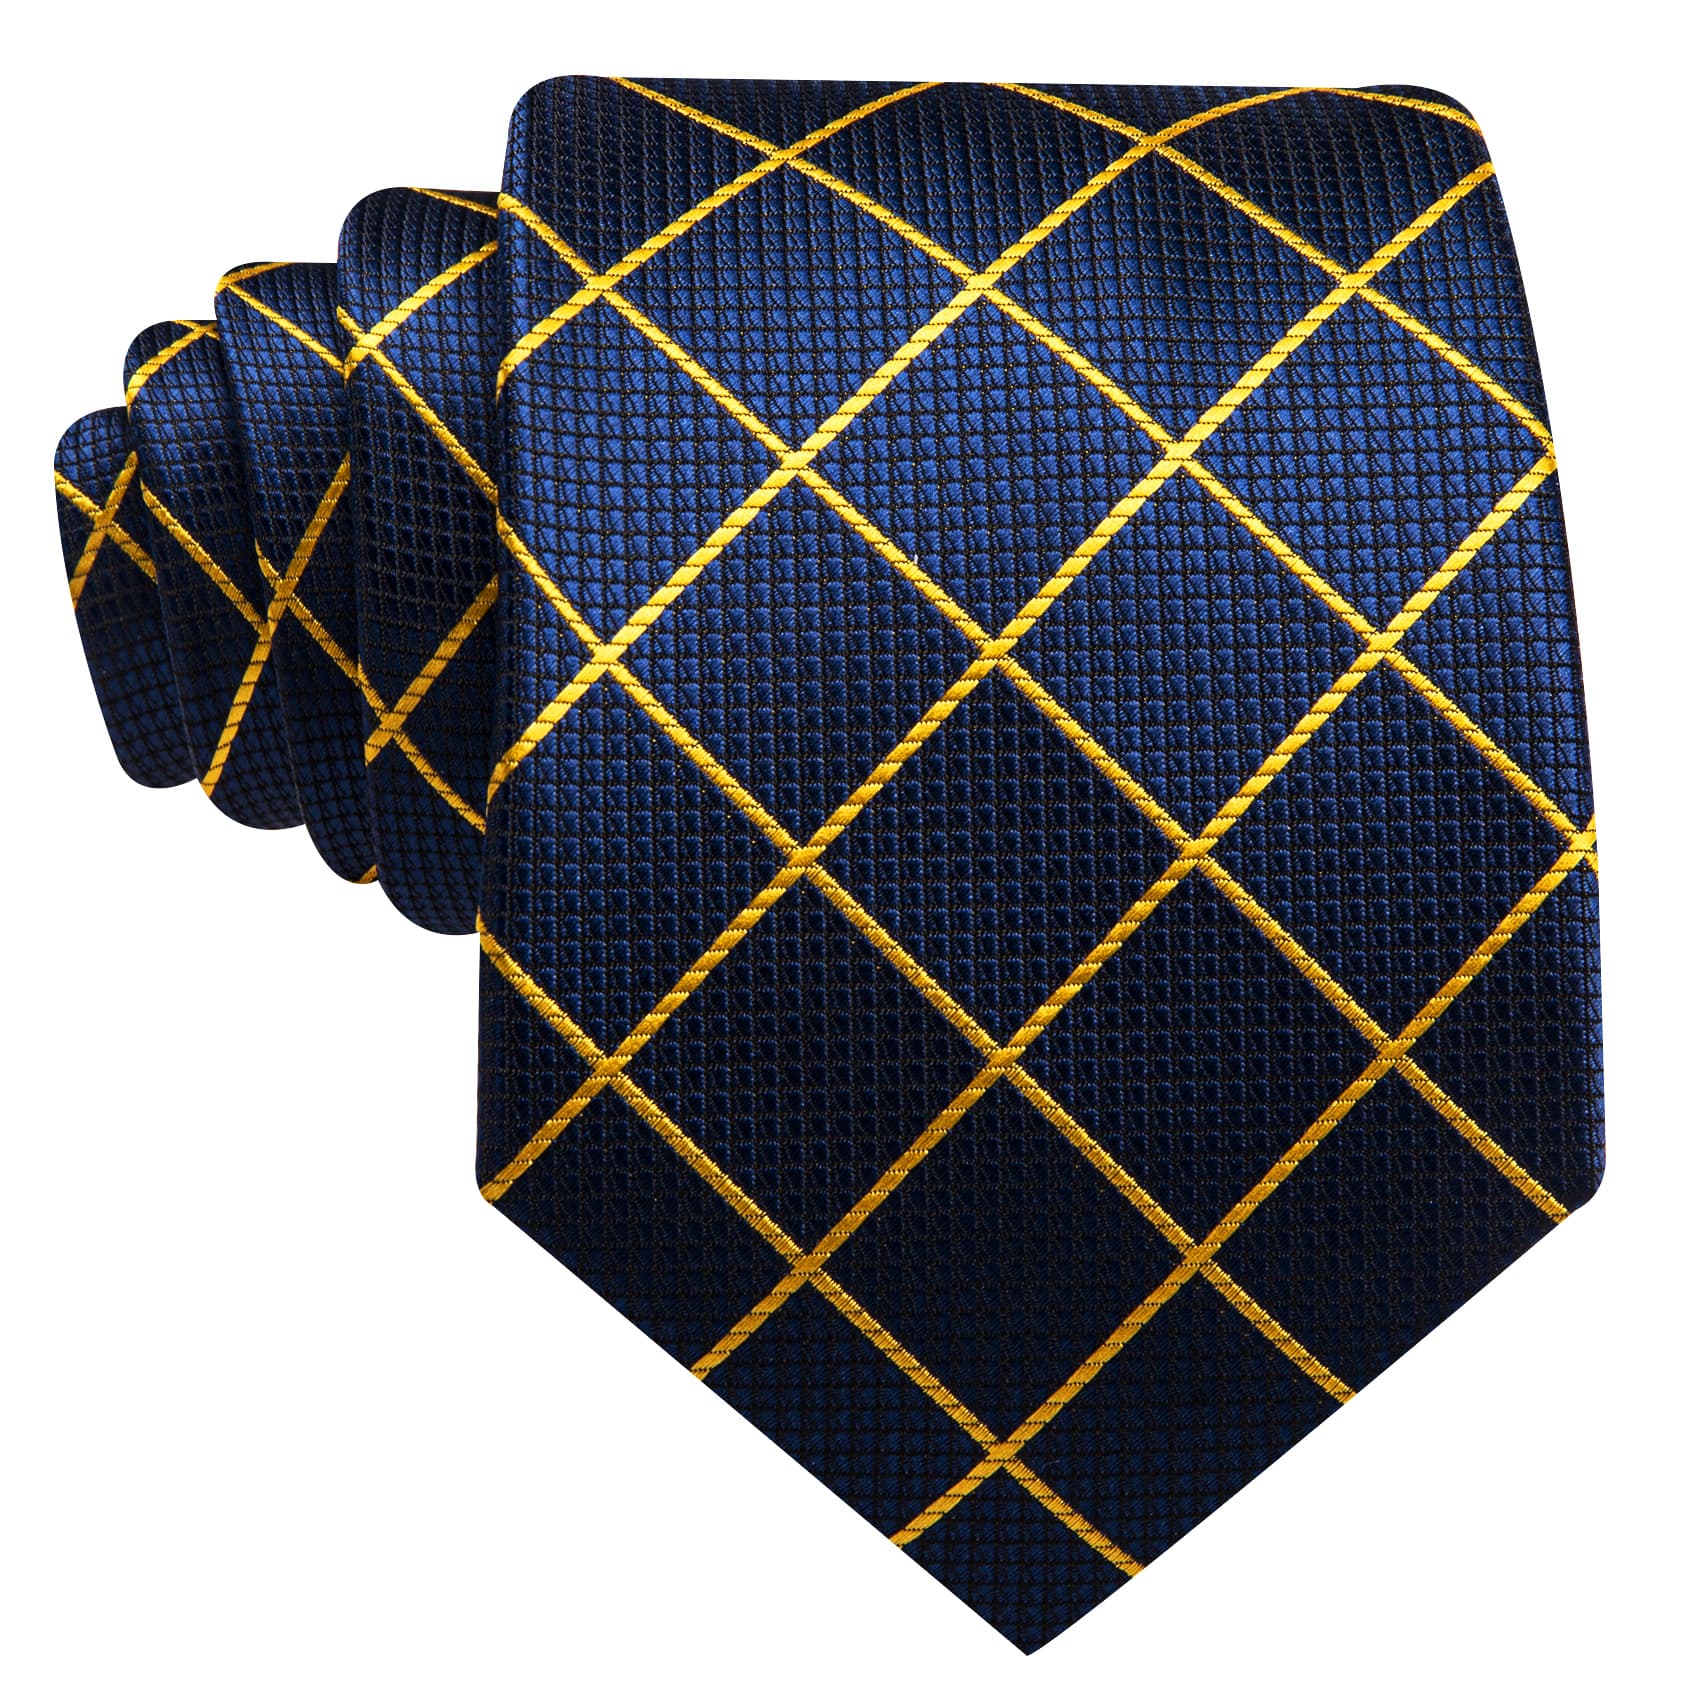  Tie Royal Blue Yelow Lines Necktie Hanky Cufflinks Set